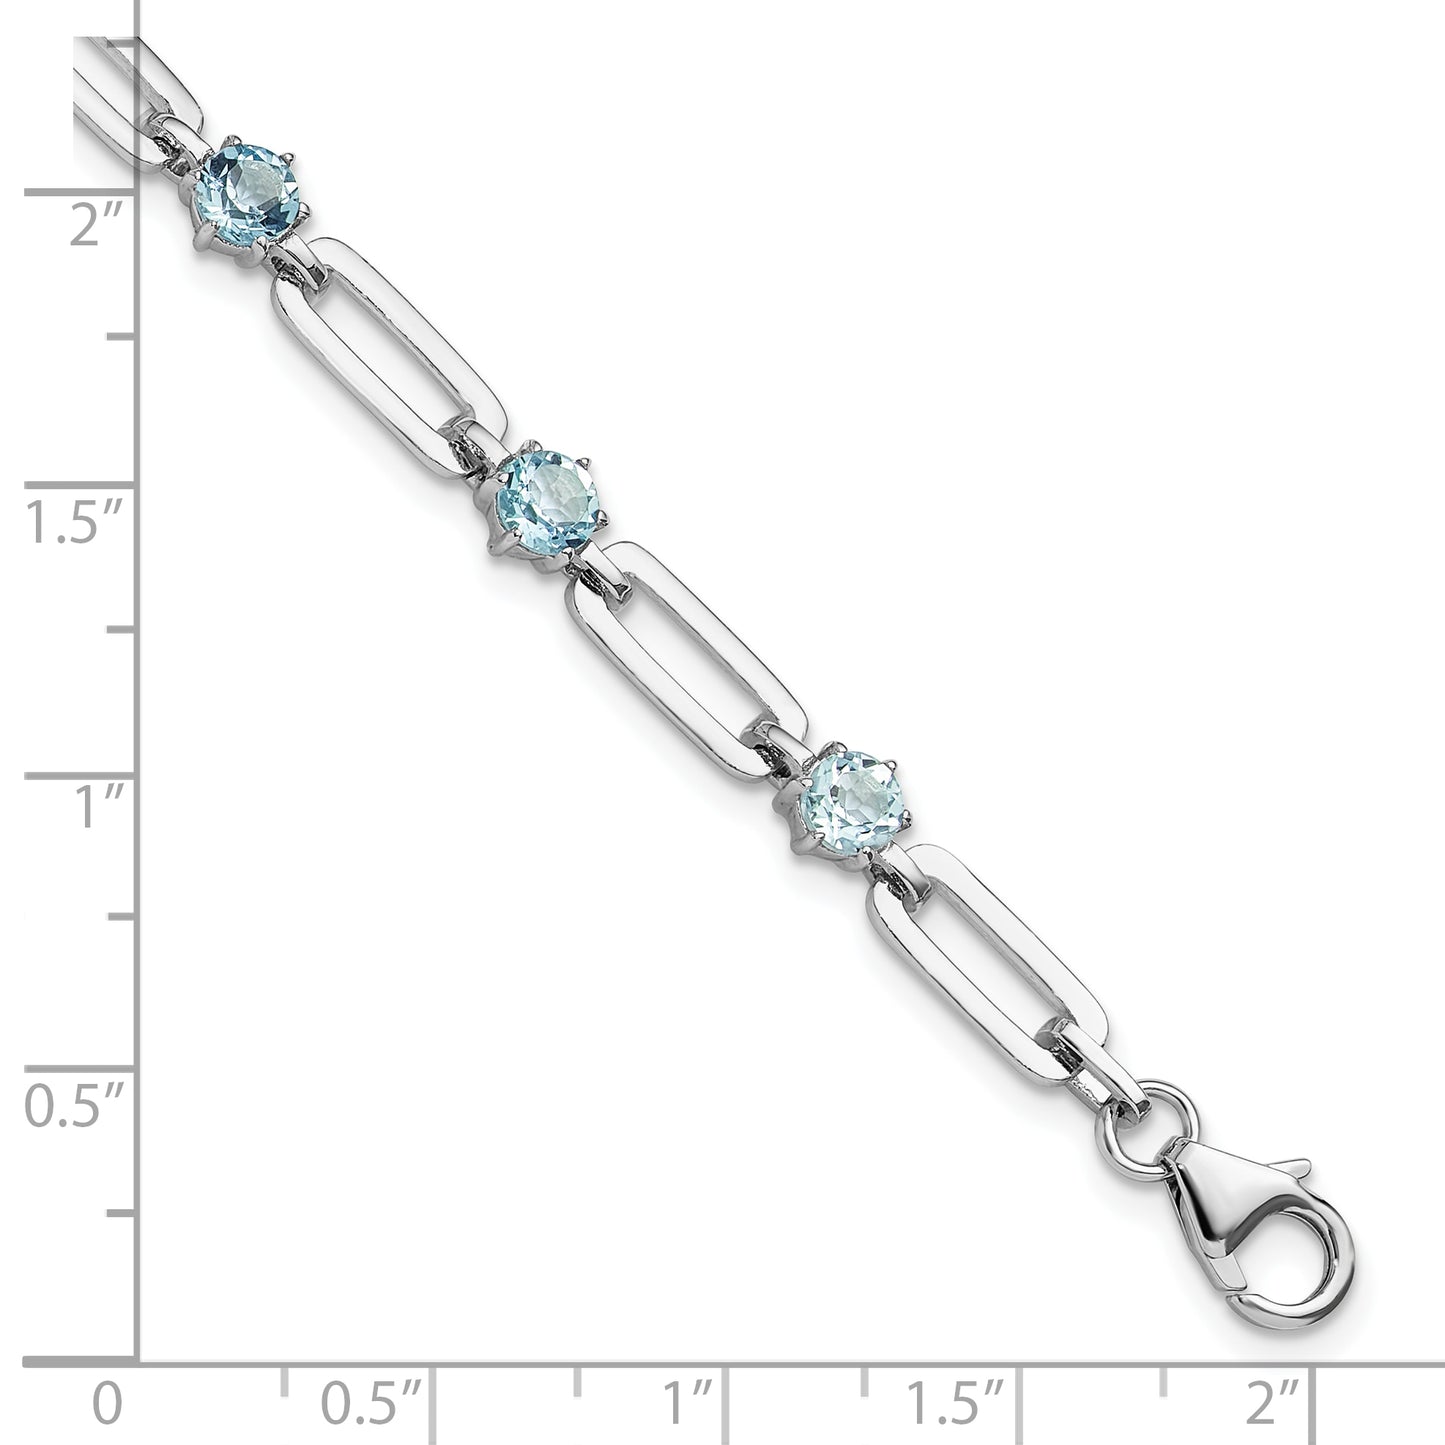 SS Rhod-plated 5mm 3.78BT Blue Topaz Paperclip Chain Bracelet